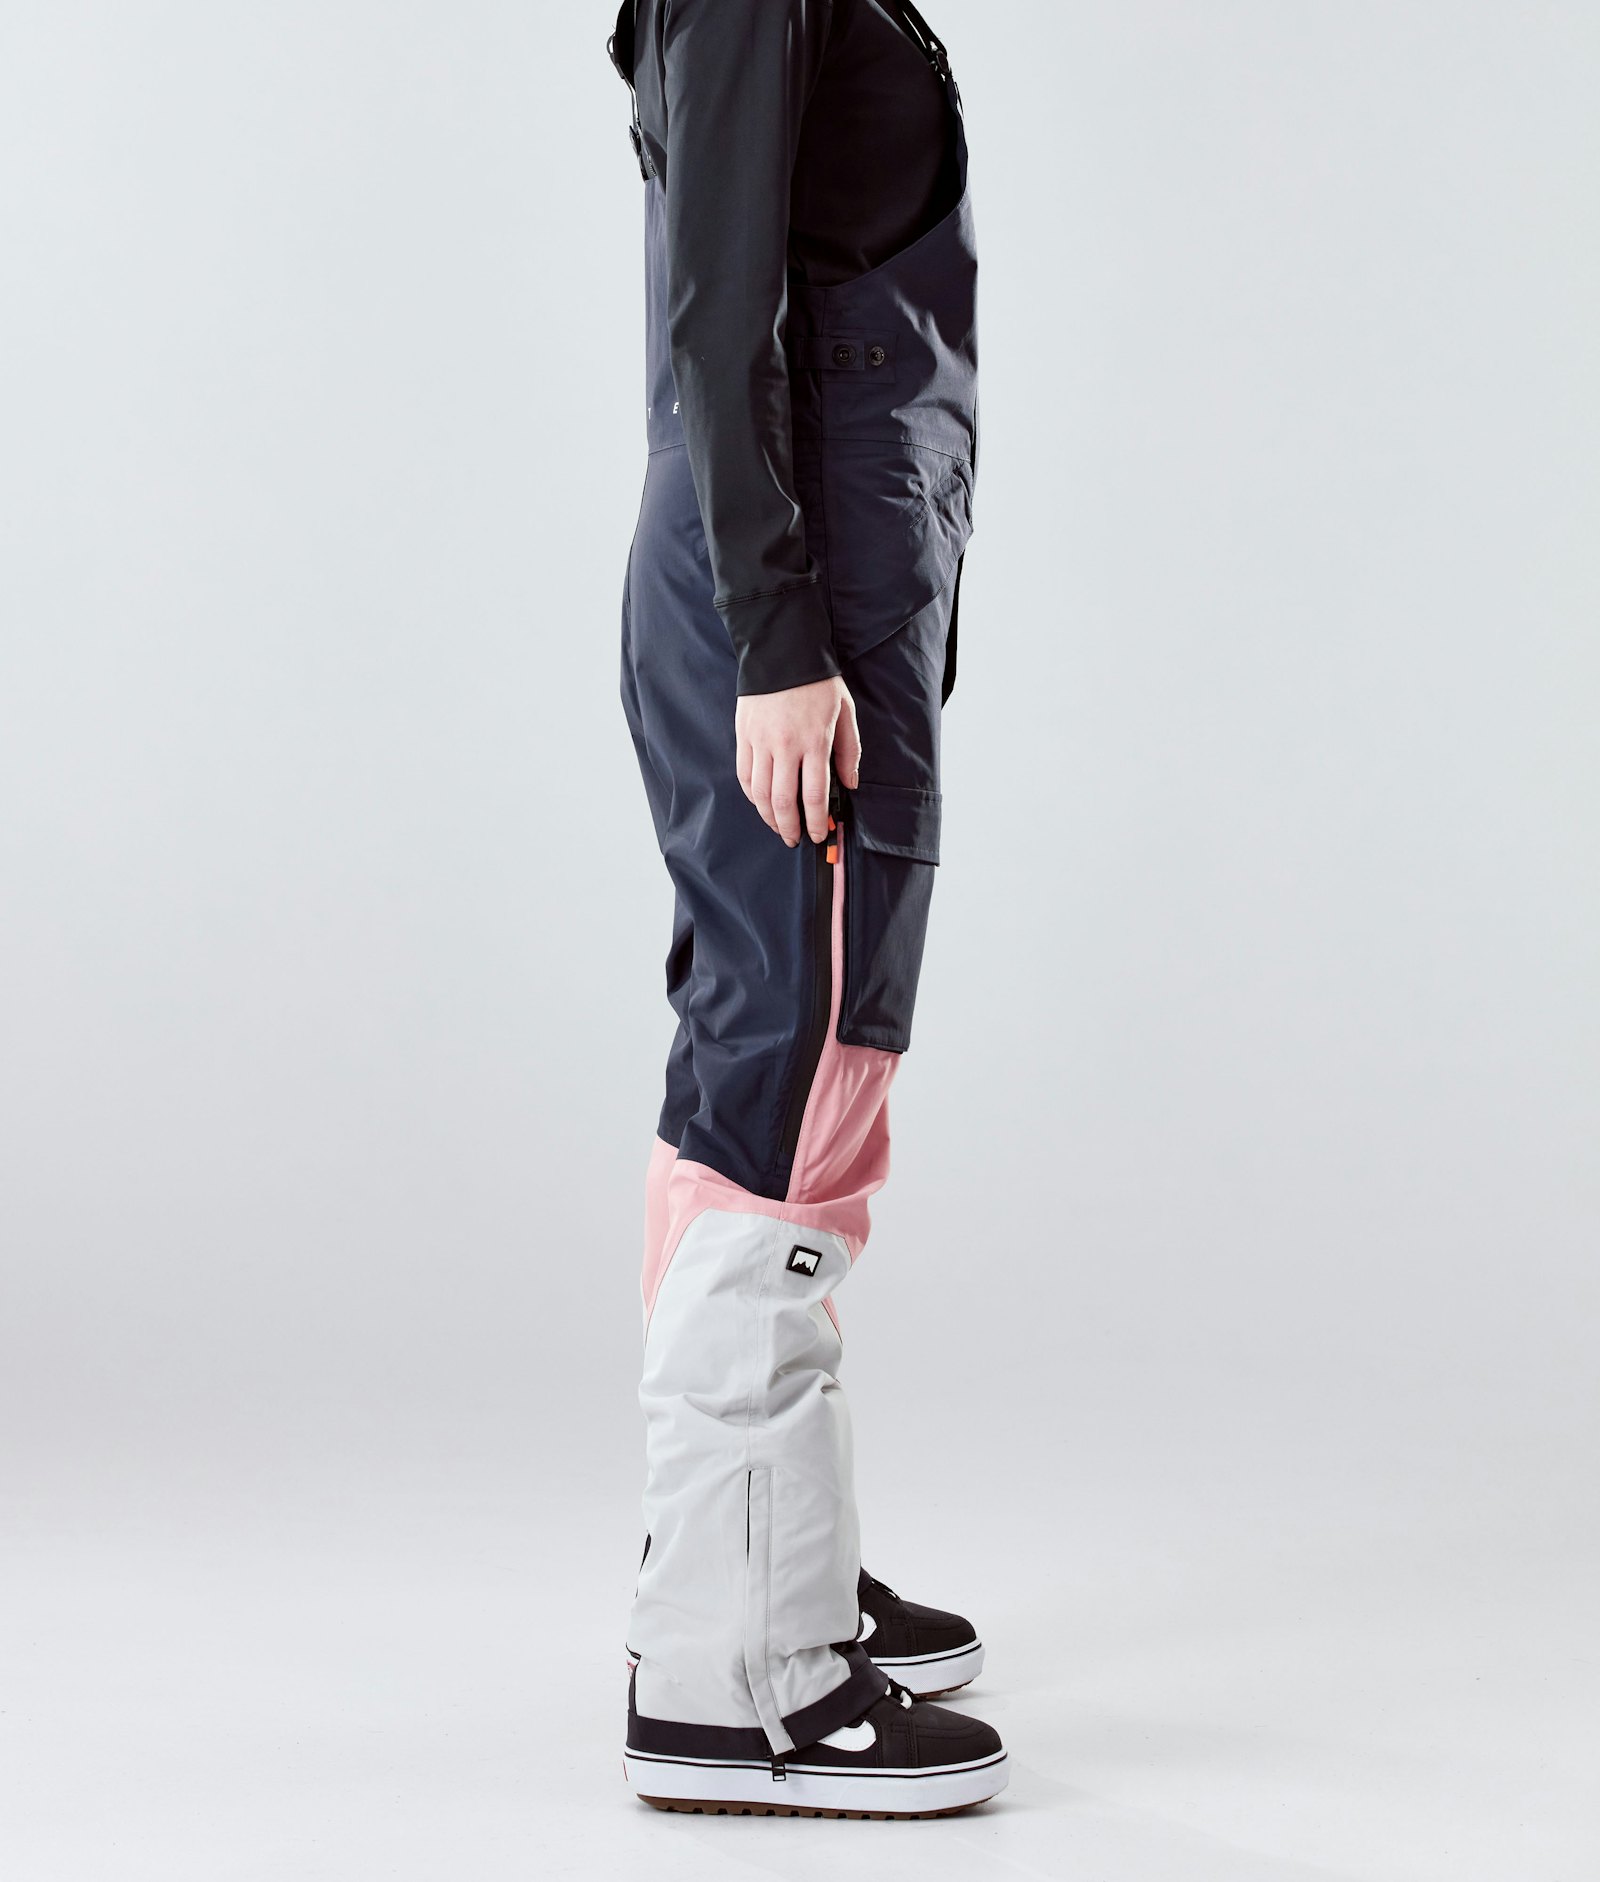 Fawk W 2020 Pantalon de Snowboard Femme Marine/Pink/Light Grey